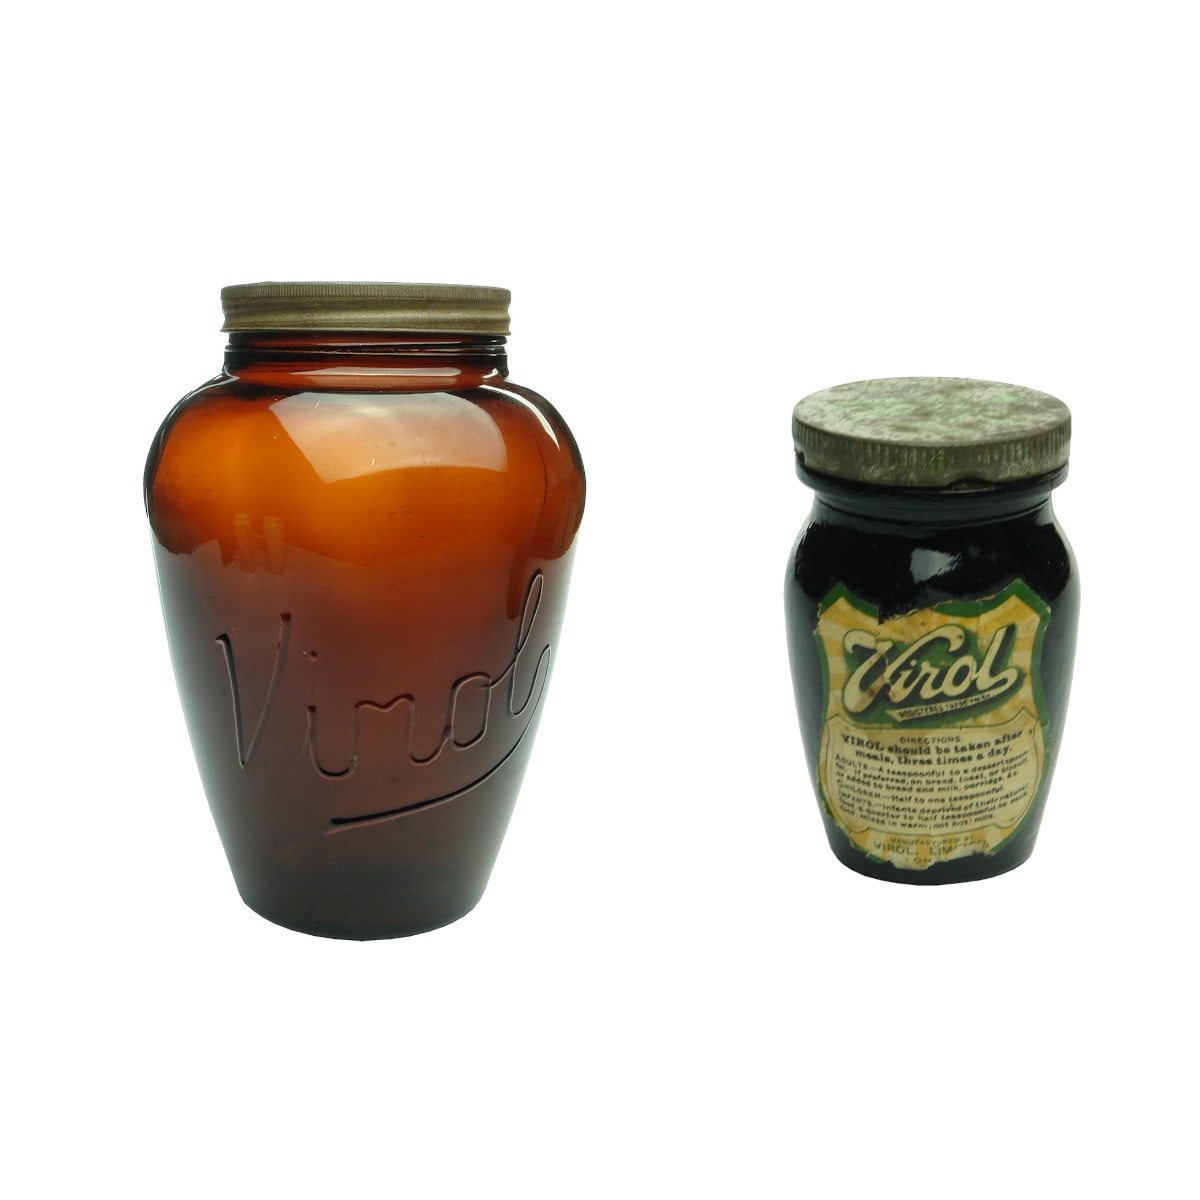 Bulk and small amber Virol jars with original tins lids. 224 mm and 81 mm.